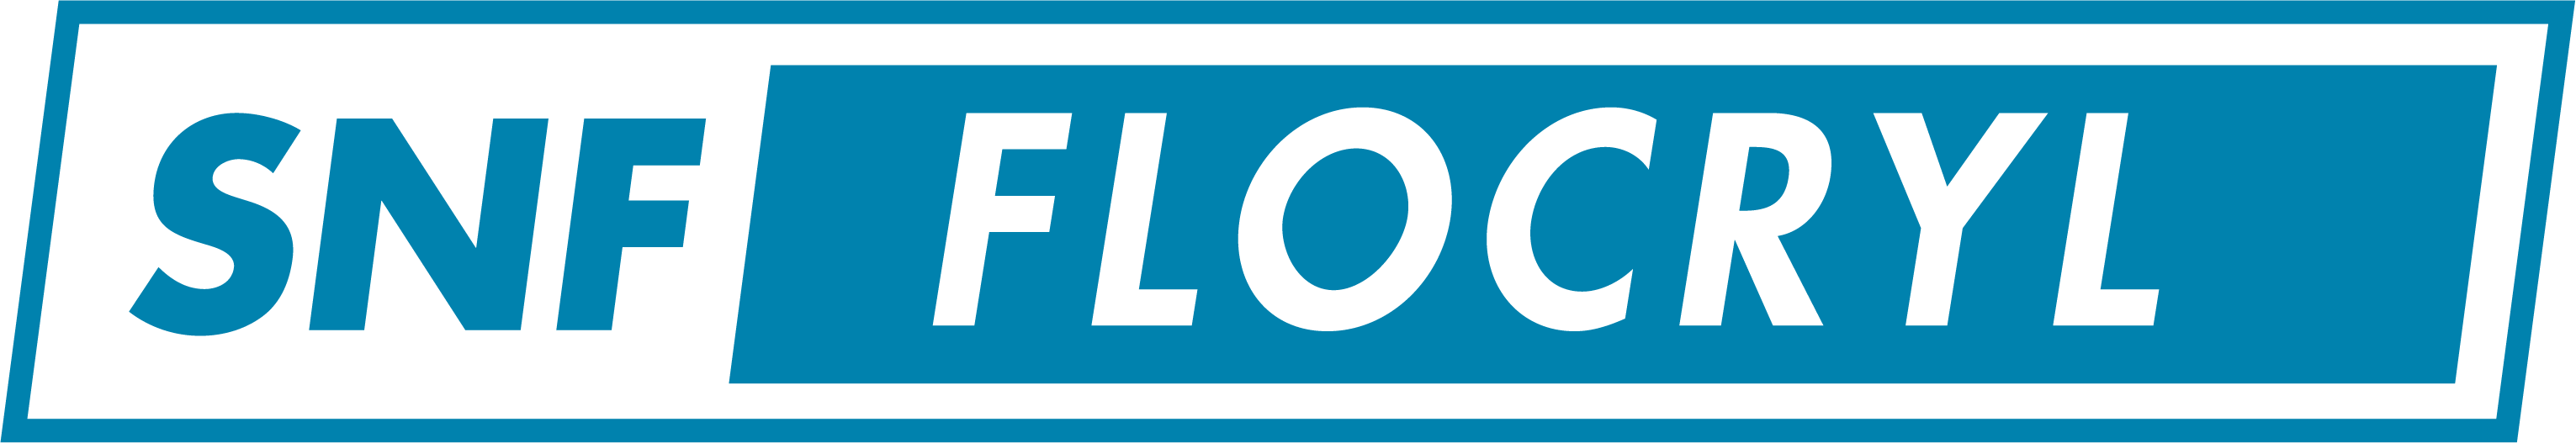 snf-flocryl-logo-rvb.png